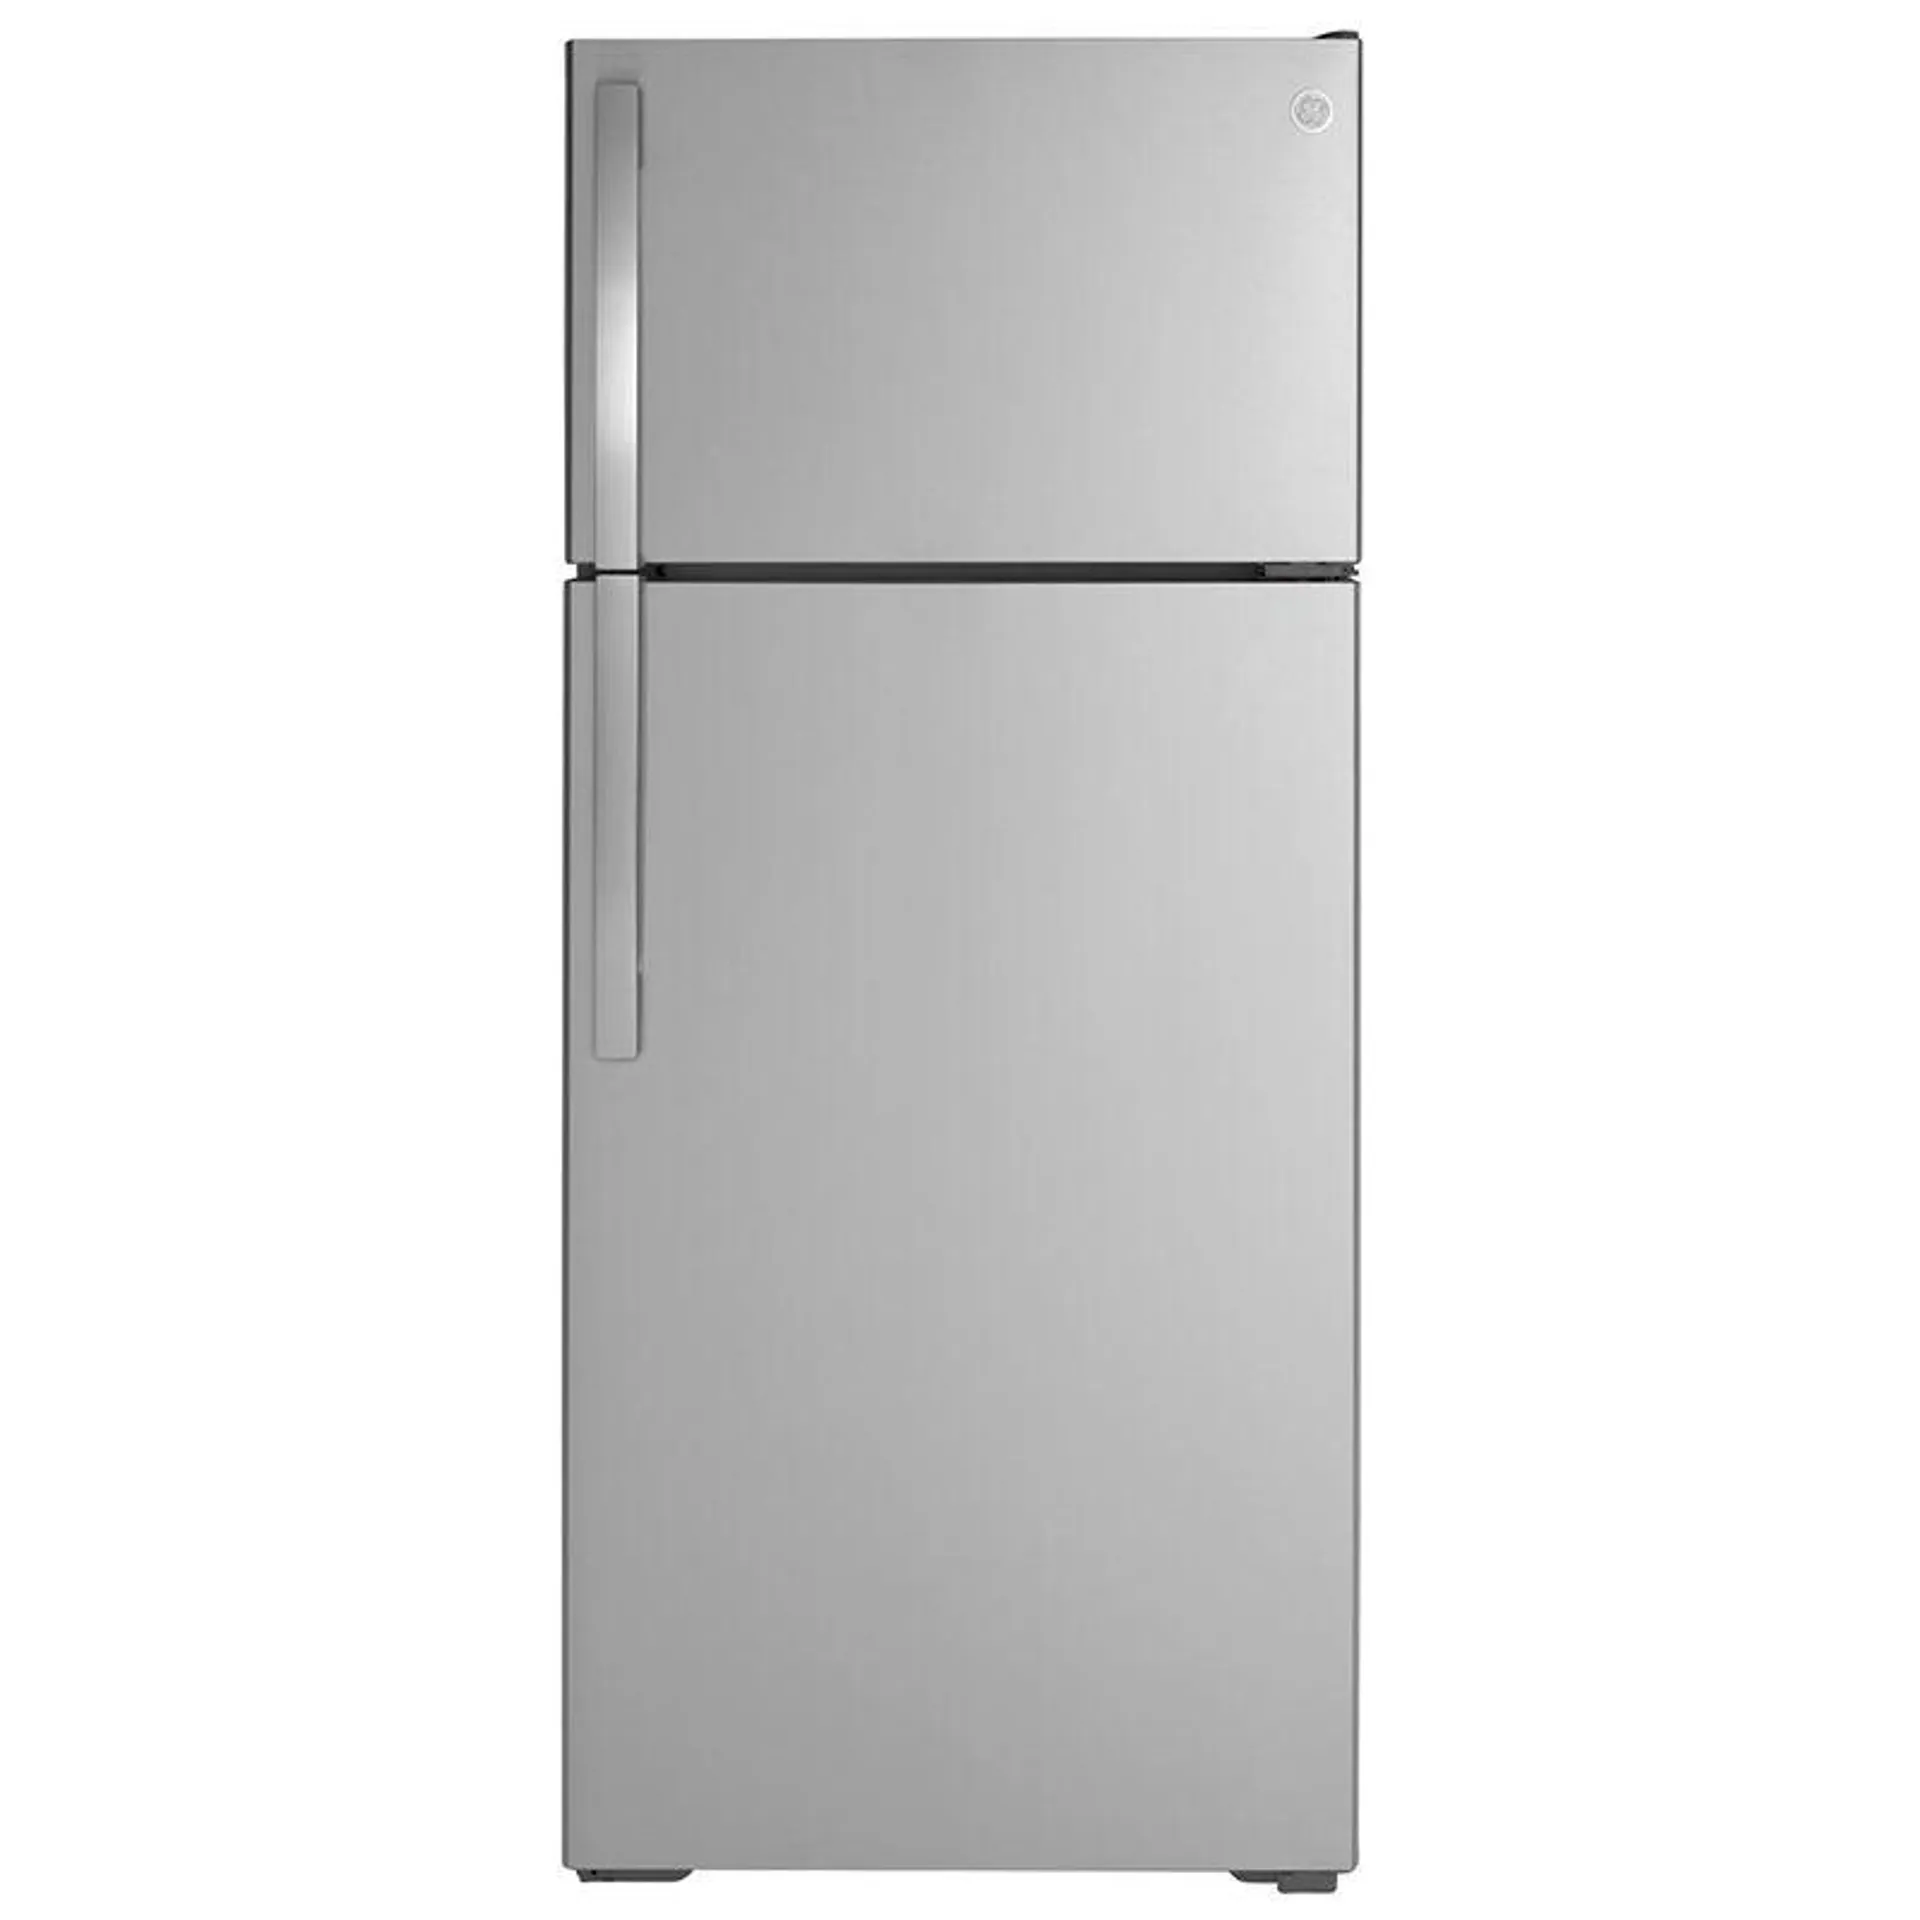 GE 28 in. 17.5 cu. ft. Top Freezer Refrigerator - Stainless Steel